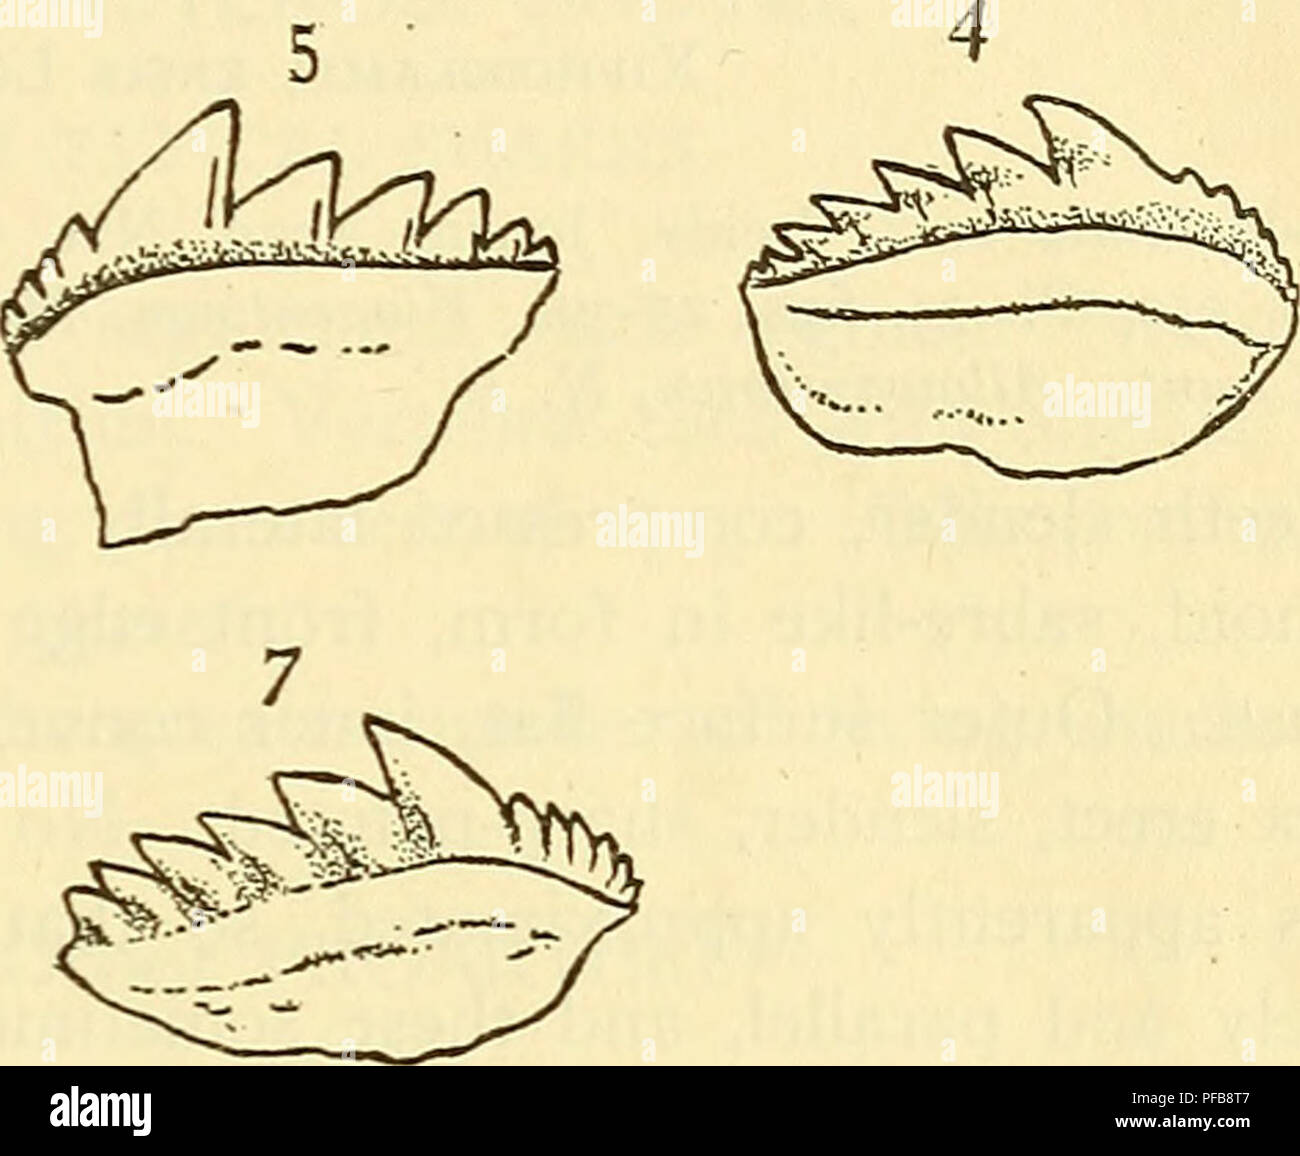 paleontology examples